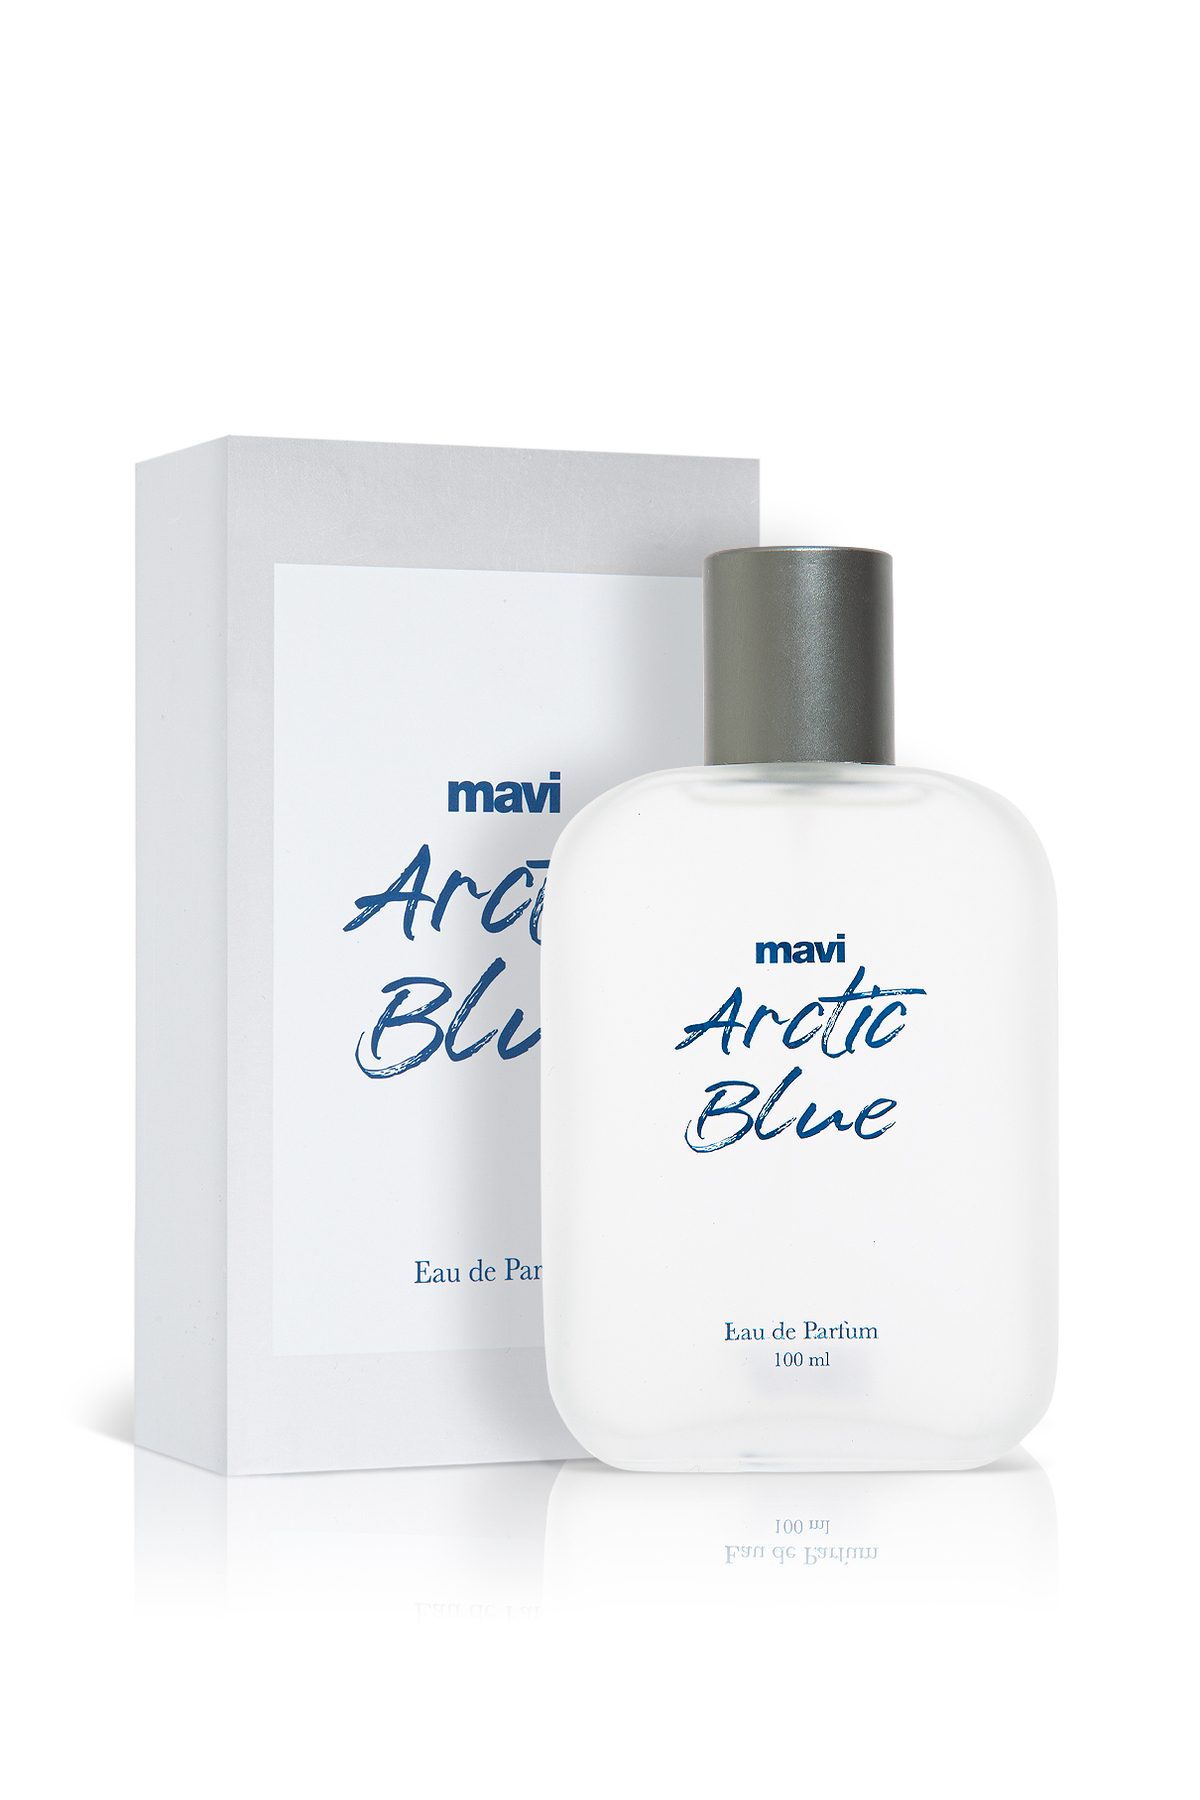 عطر مردانه 100 میل ارتریک بلو ماوی Arctic Blue Mavi